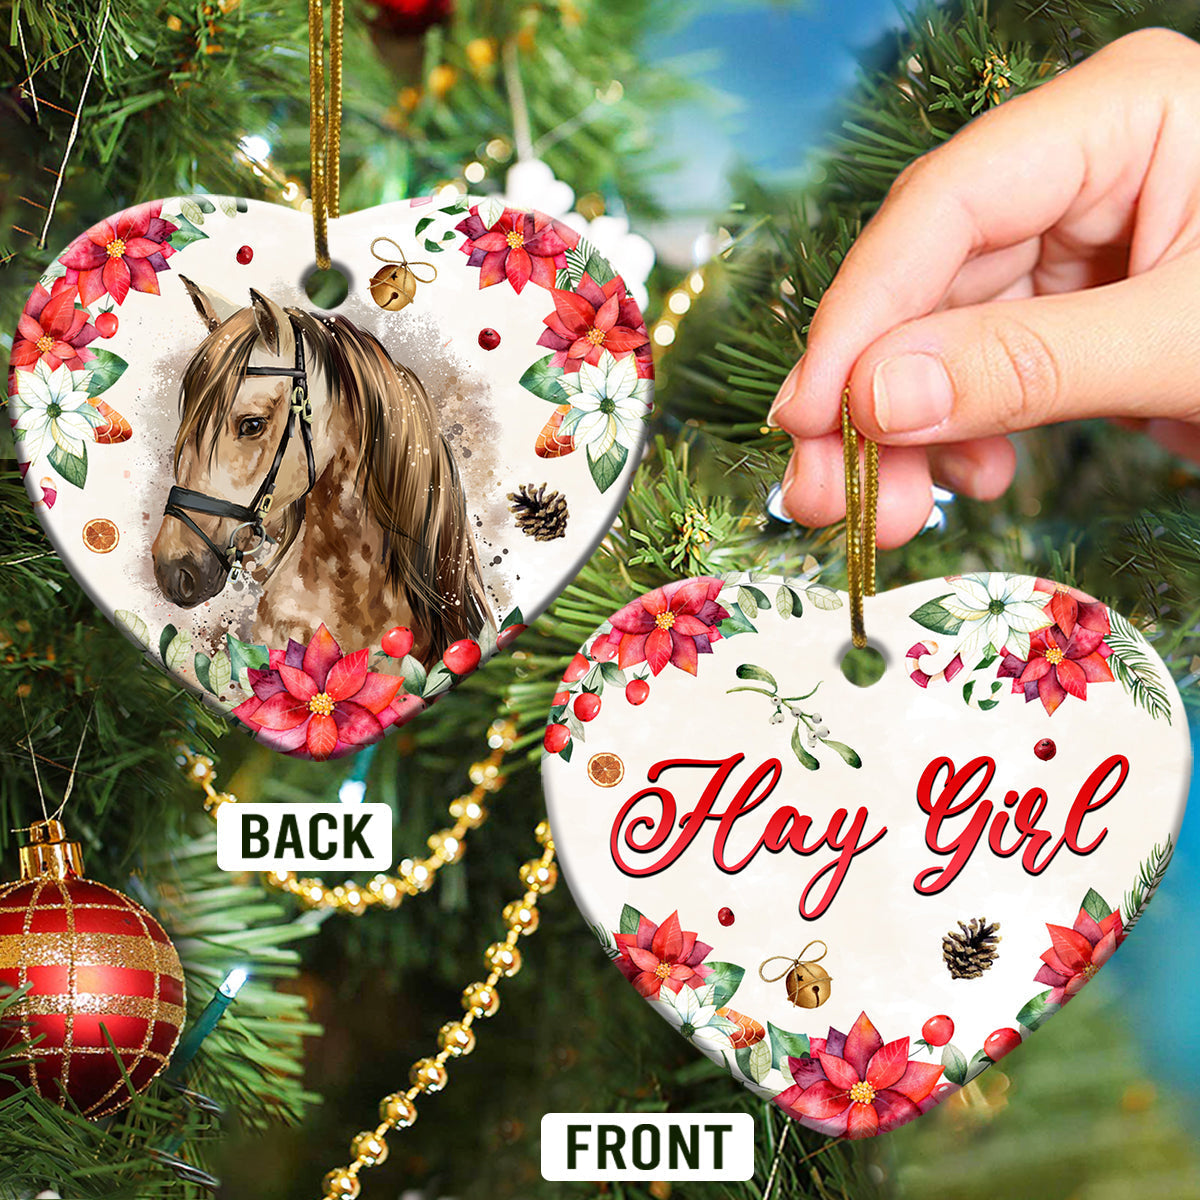 Horse Lover Hay Girl - Heart Ornament - Owls Matrix LTD